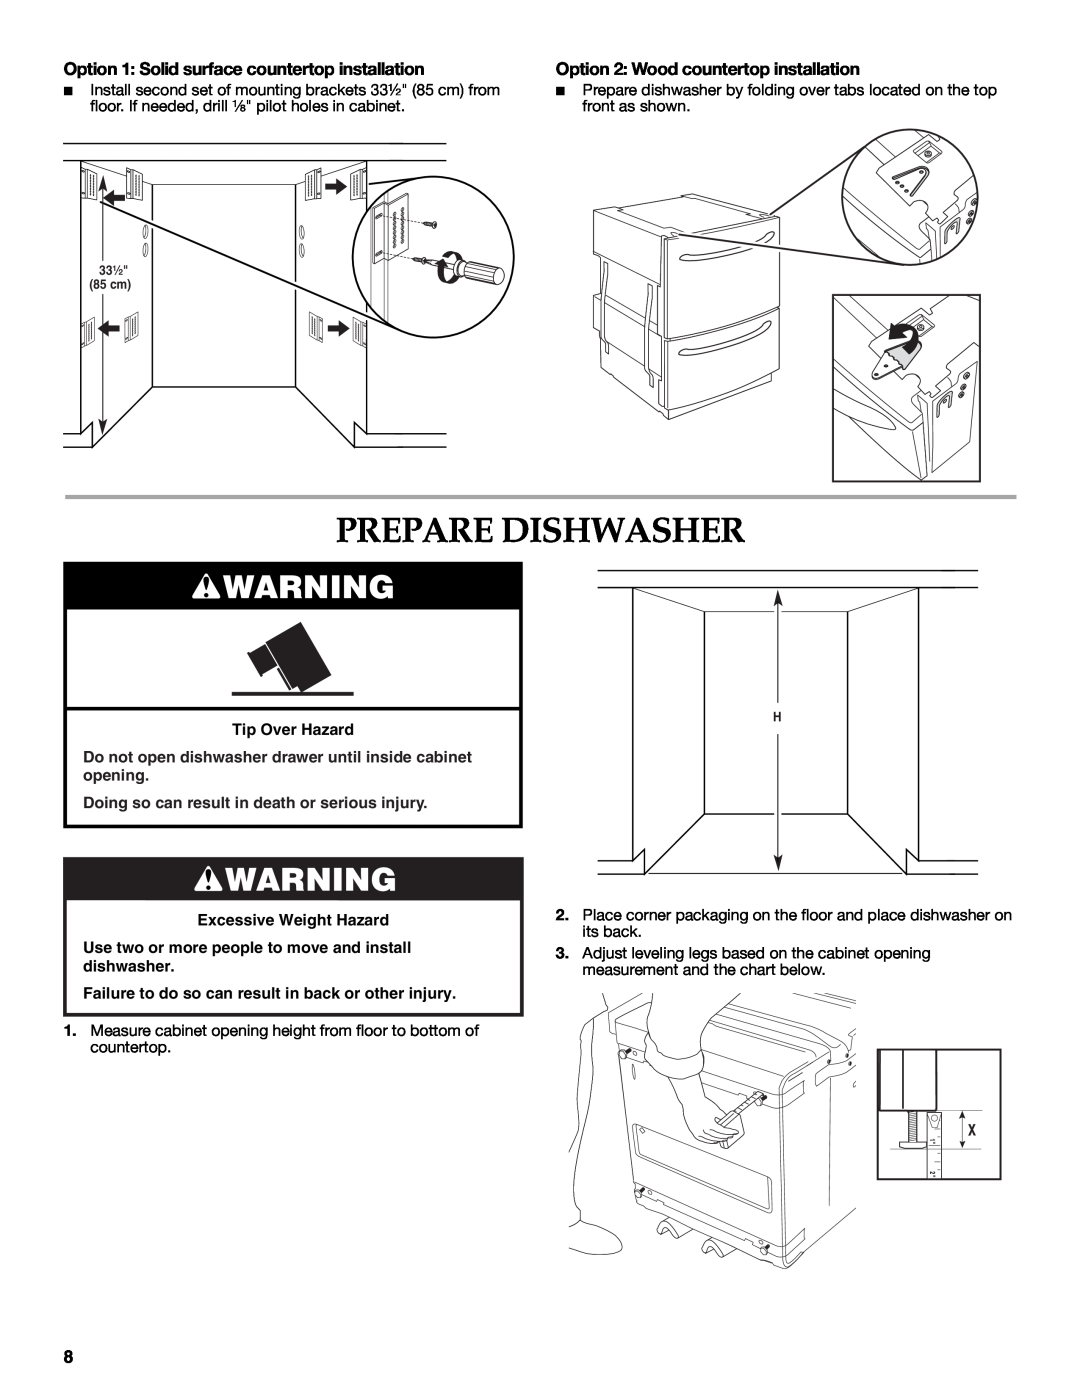 KitchenAid W10216167A Prepare Dishwasher, Option 1 Solid surface countertop installation, Tip Over Hazard 